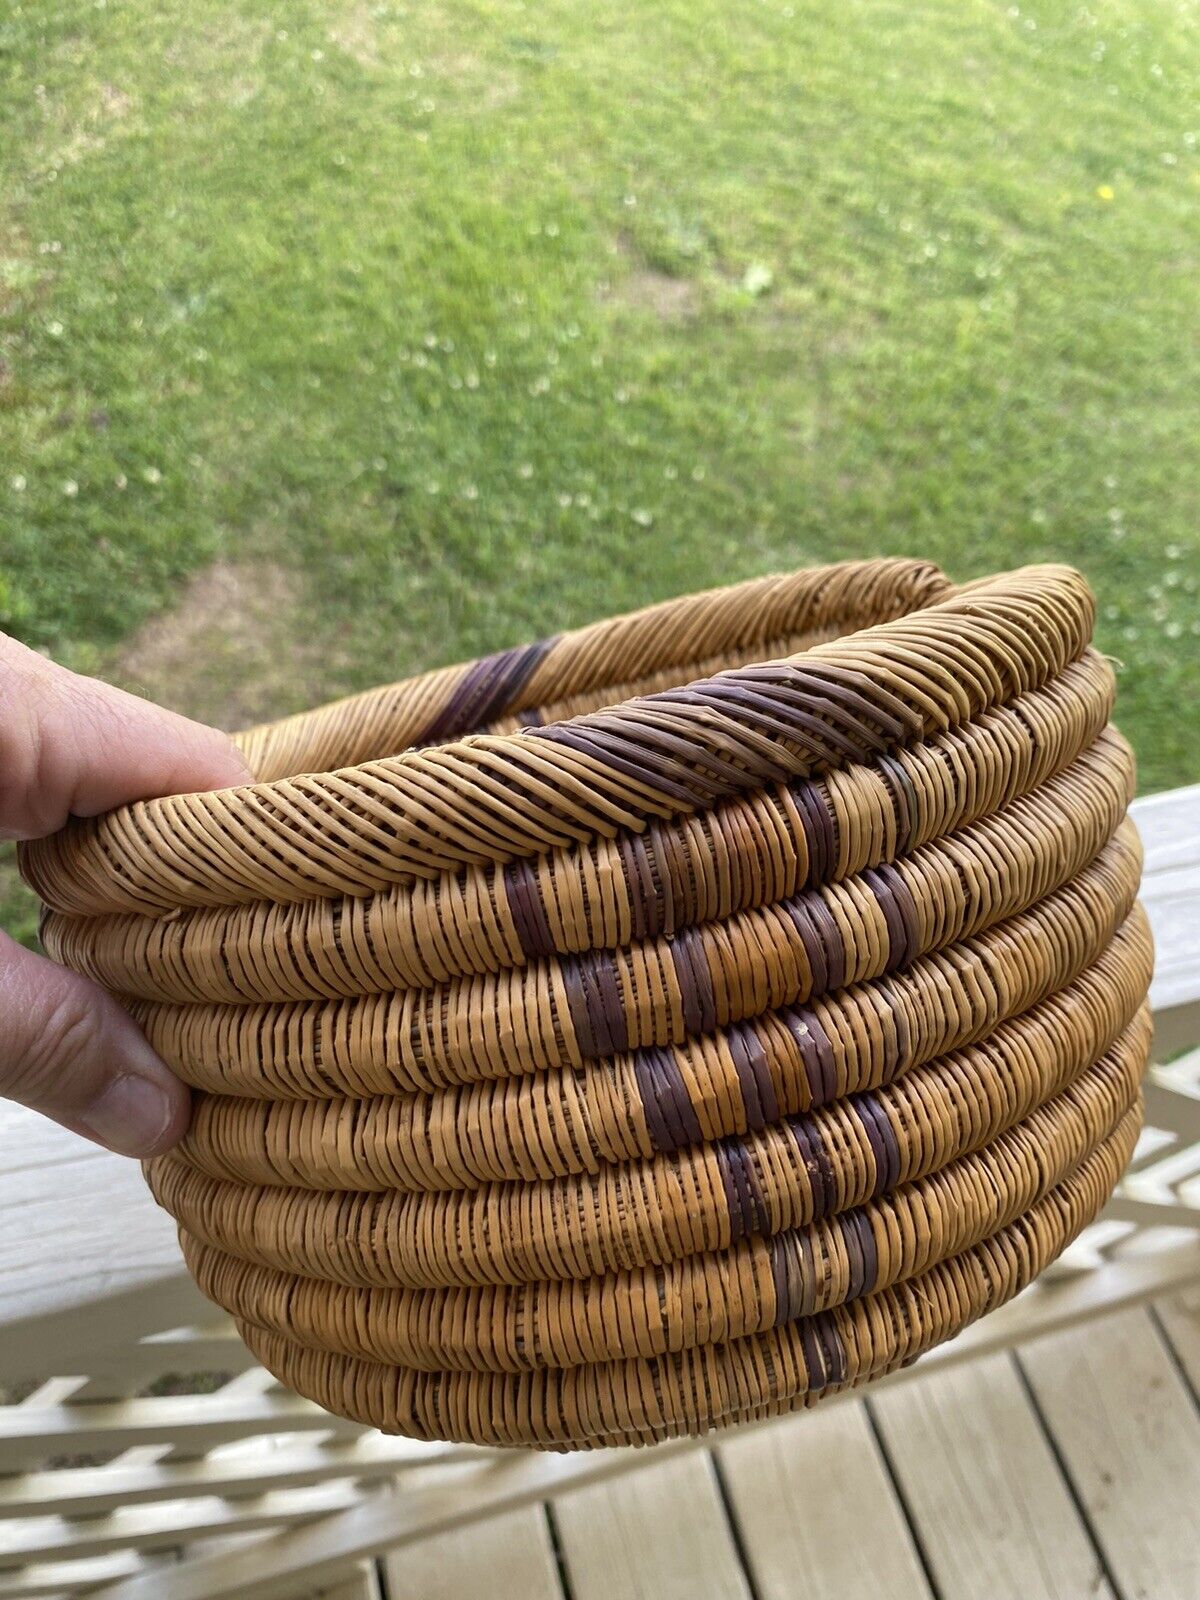 Native American Woven Baskets 